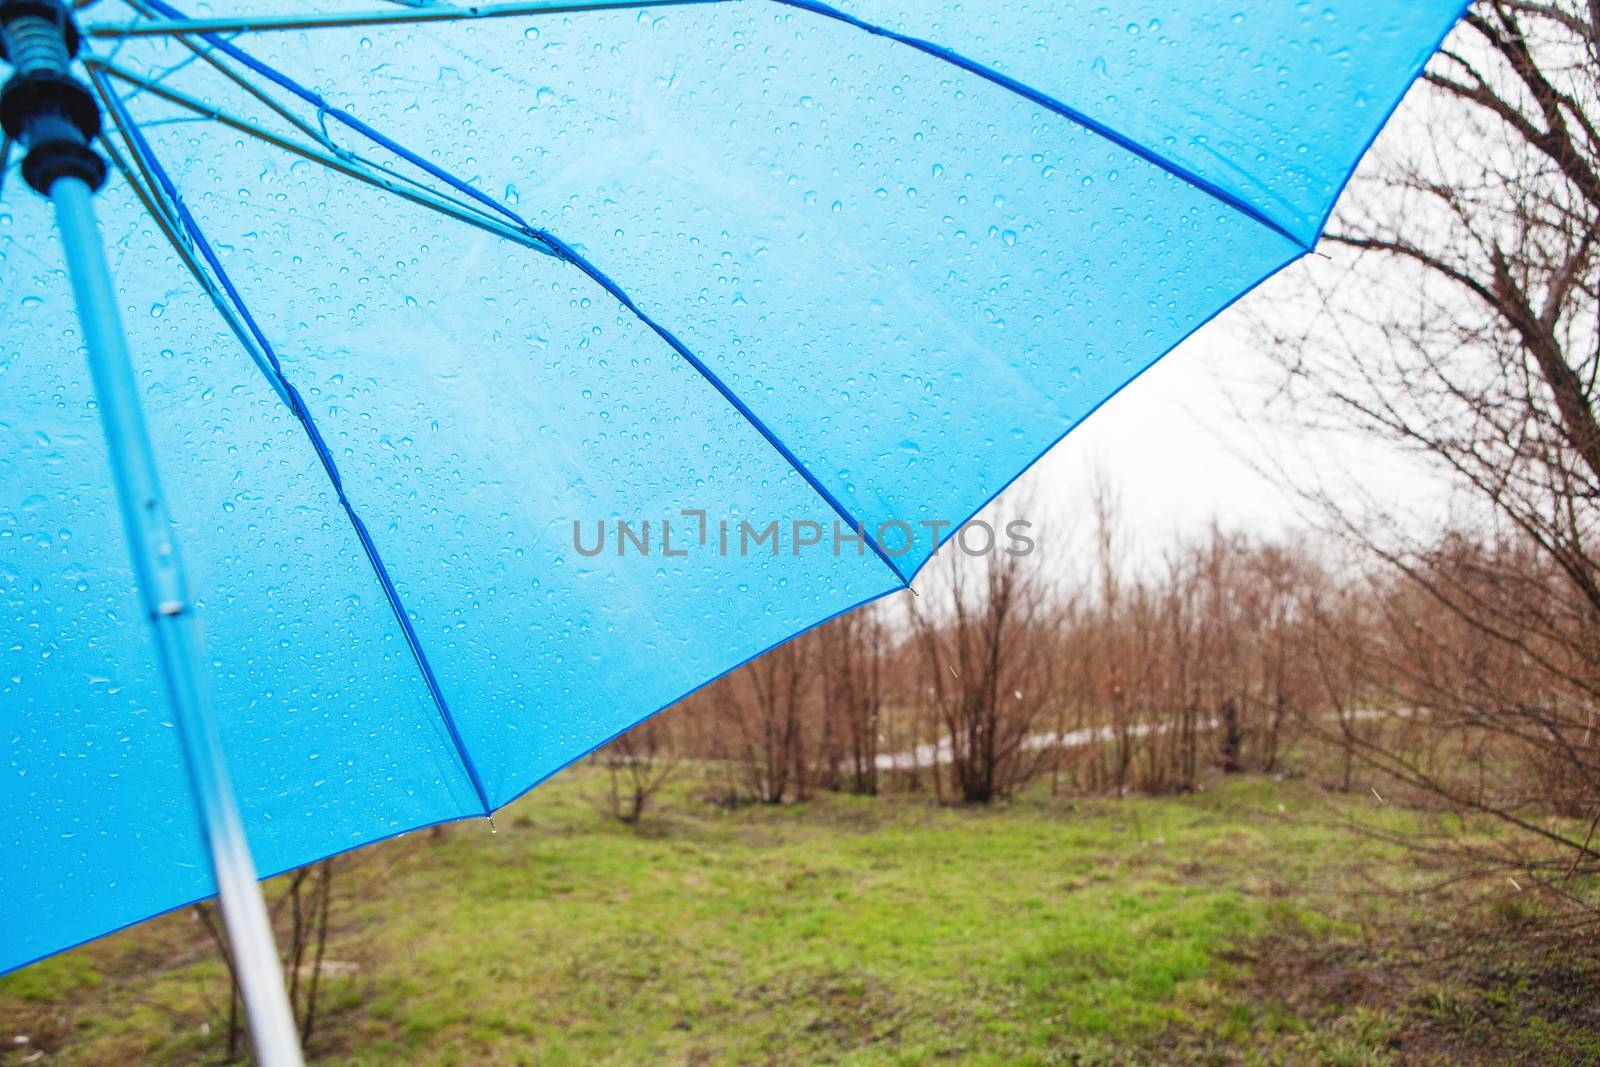 rainy umbrella in the park by vsurkov